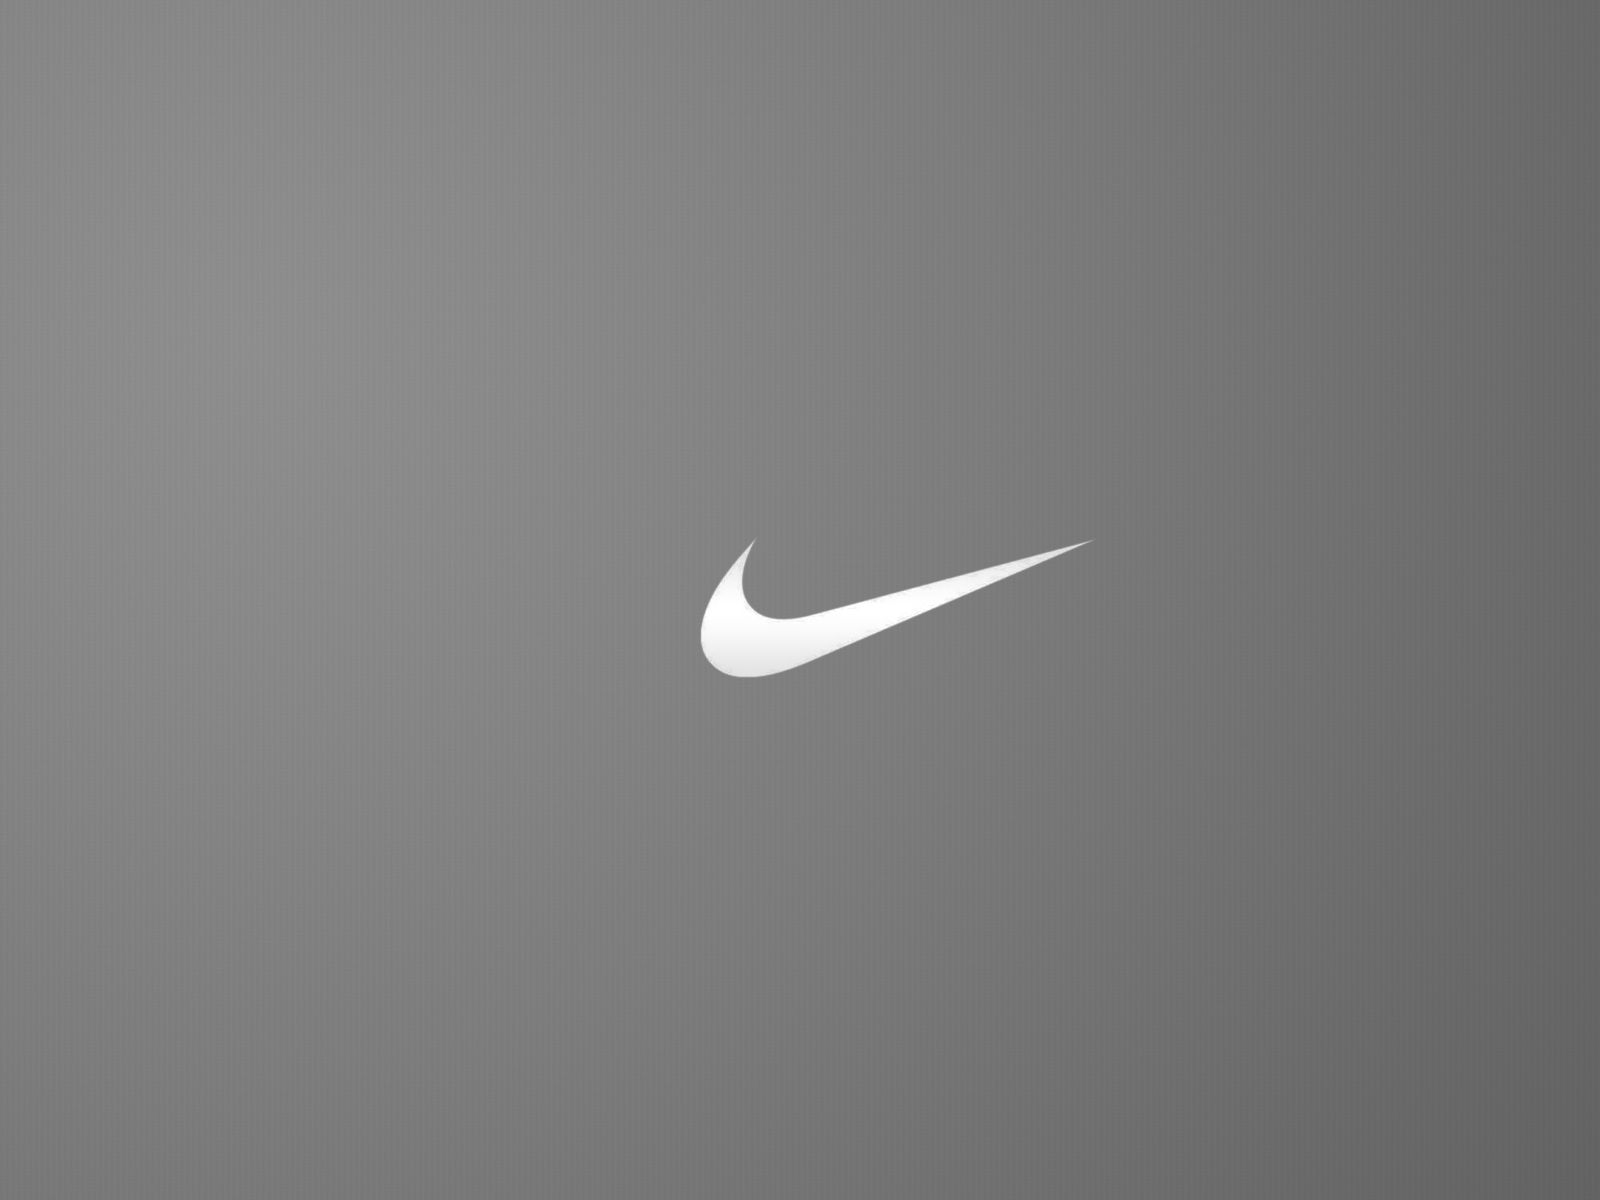 Стол найк. Nike logo 2022. Nike logo 2023.